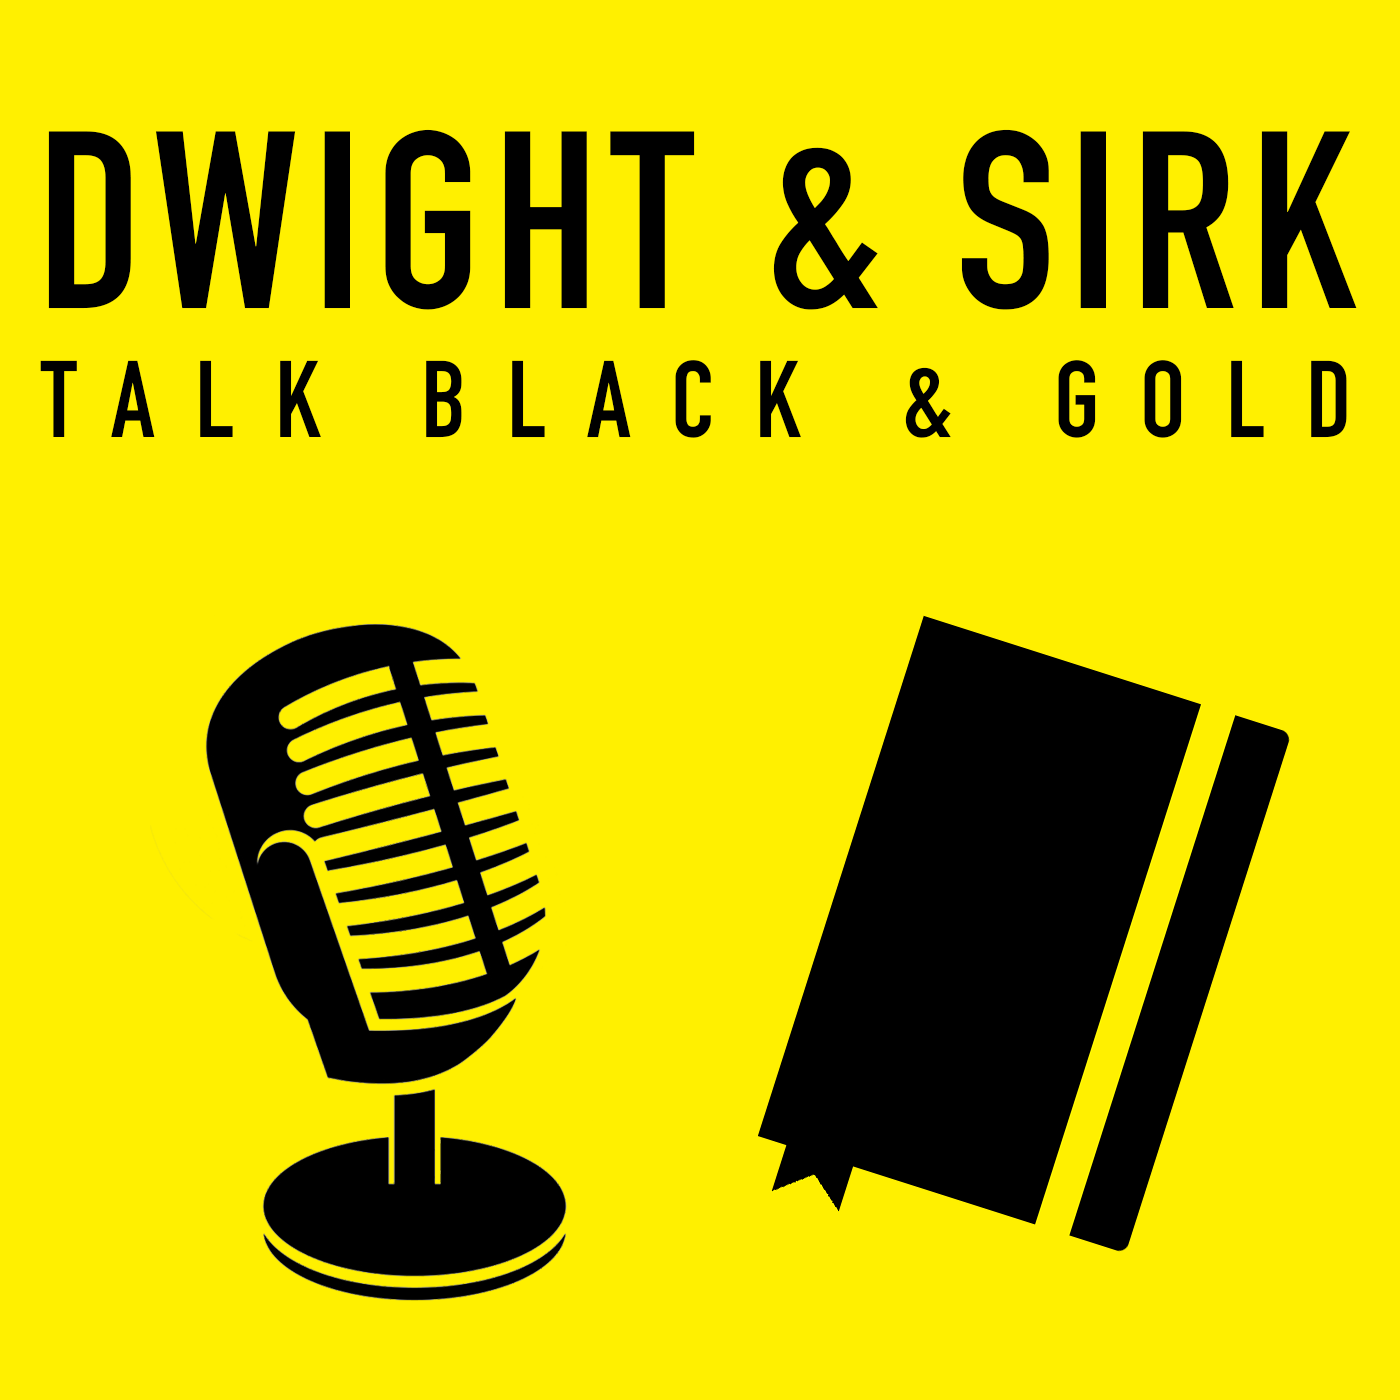 Dwight & Sirk Talk Black and Gold #2